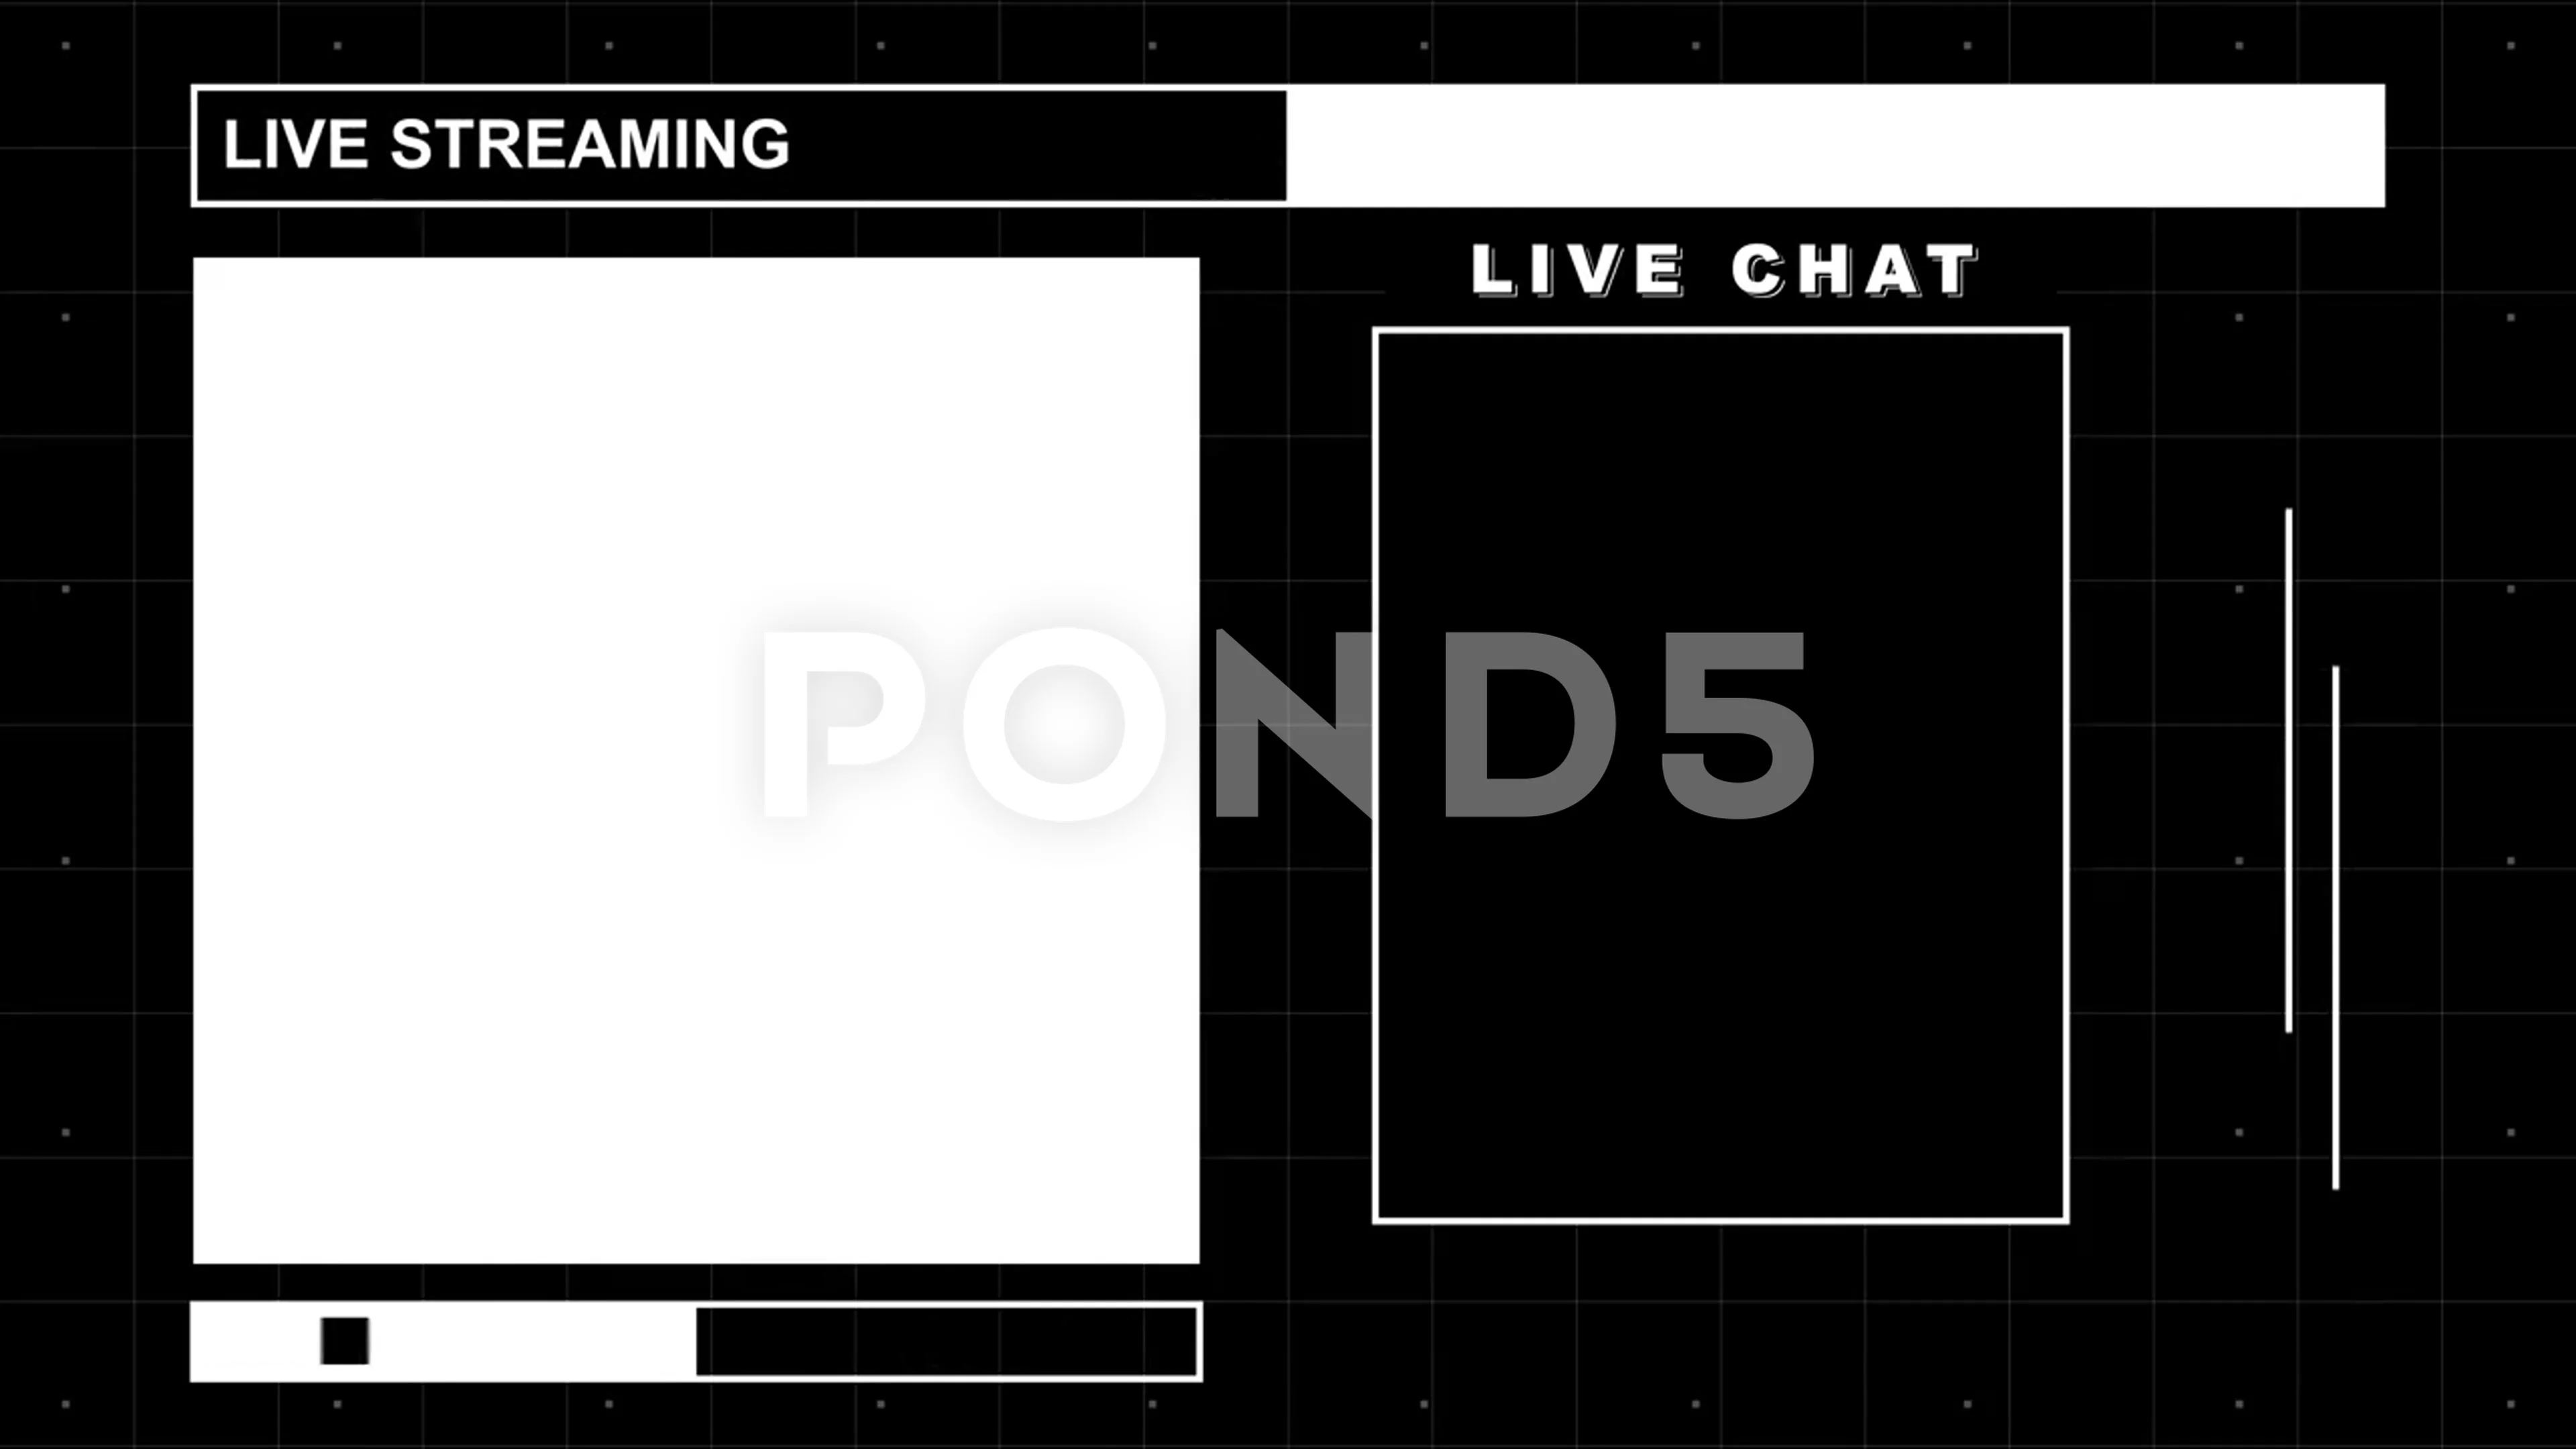 Pond5 live chat